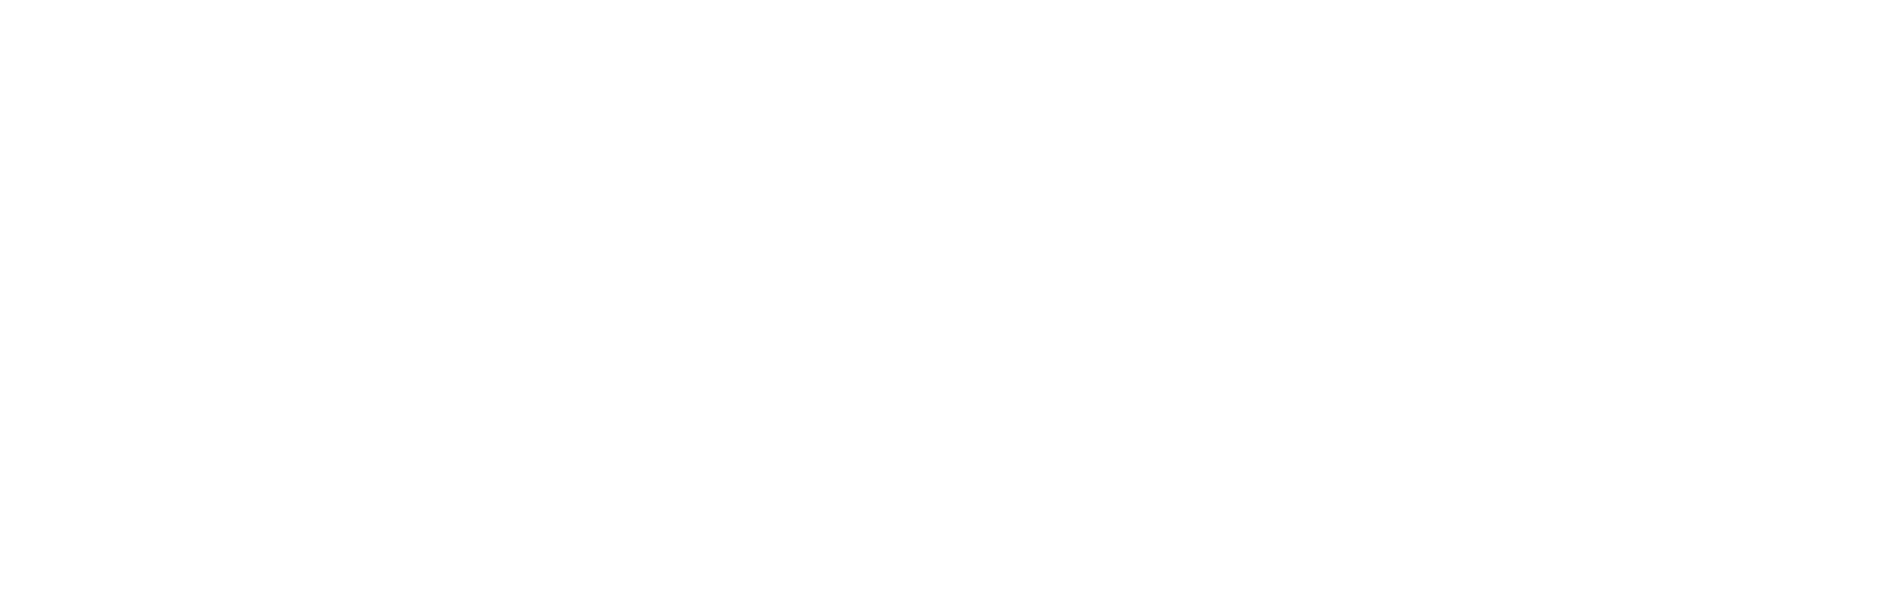 OCHU CUPE logo